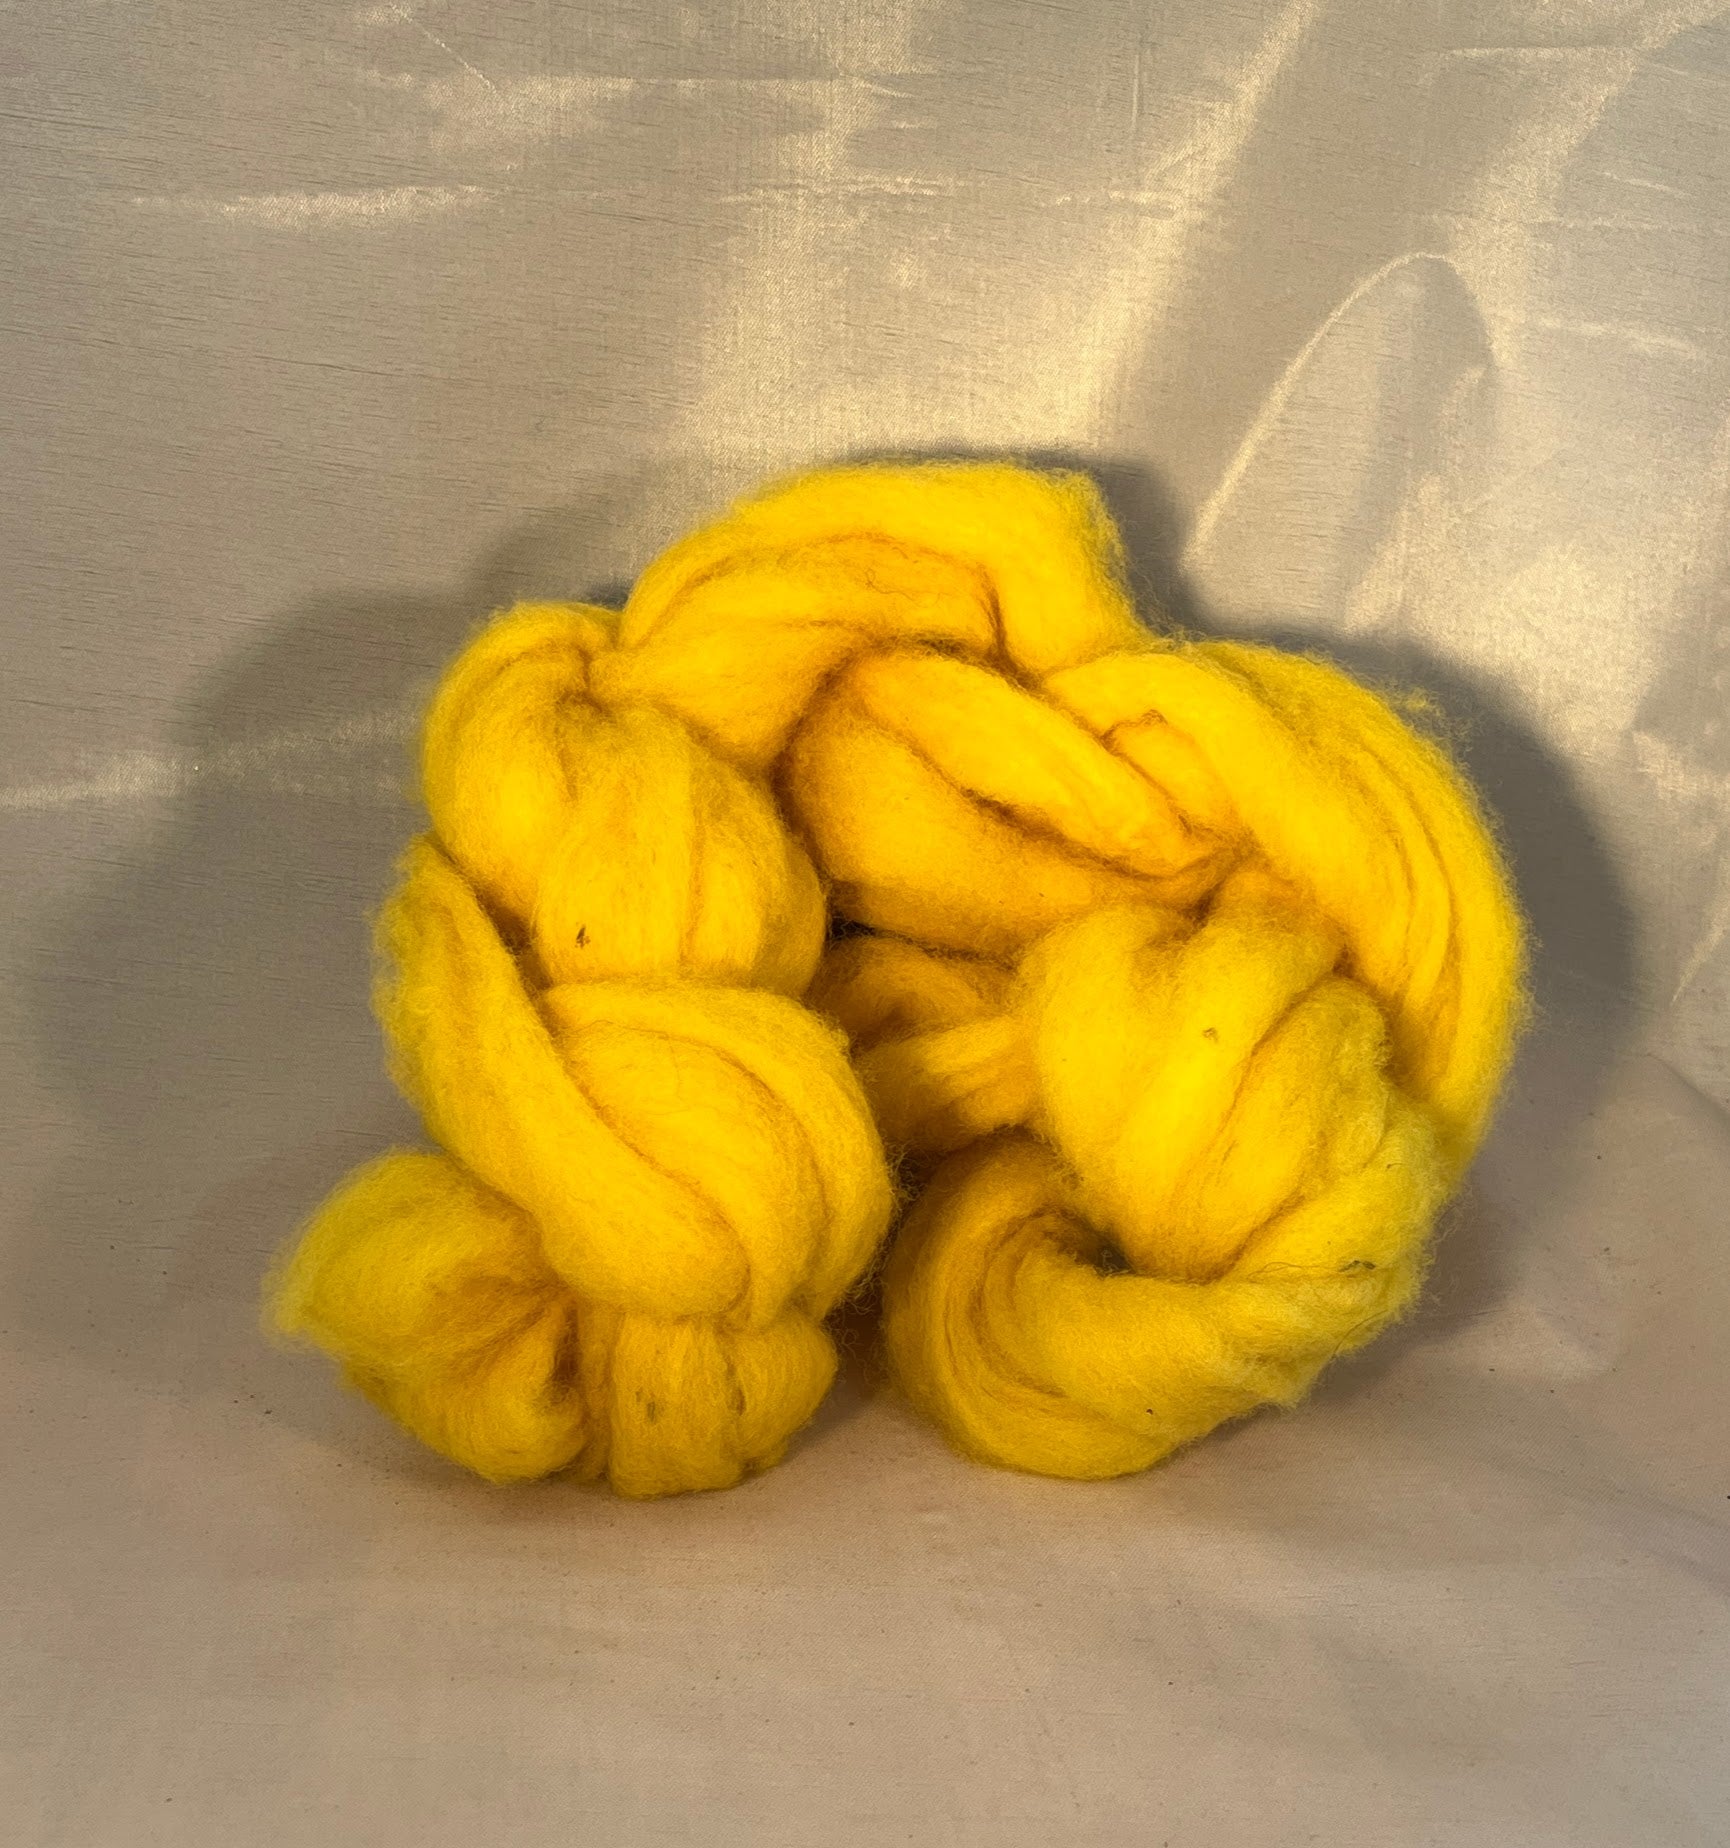 NATURAL BROWN- American Farm Wool- Medium Grade Wool Roving for Feltin –  FeltLOOM